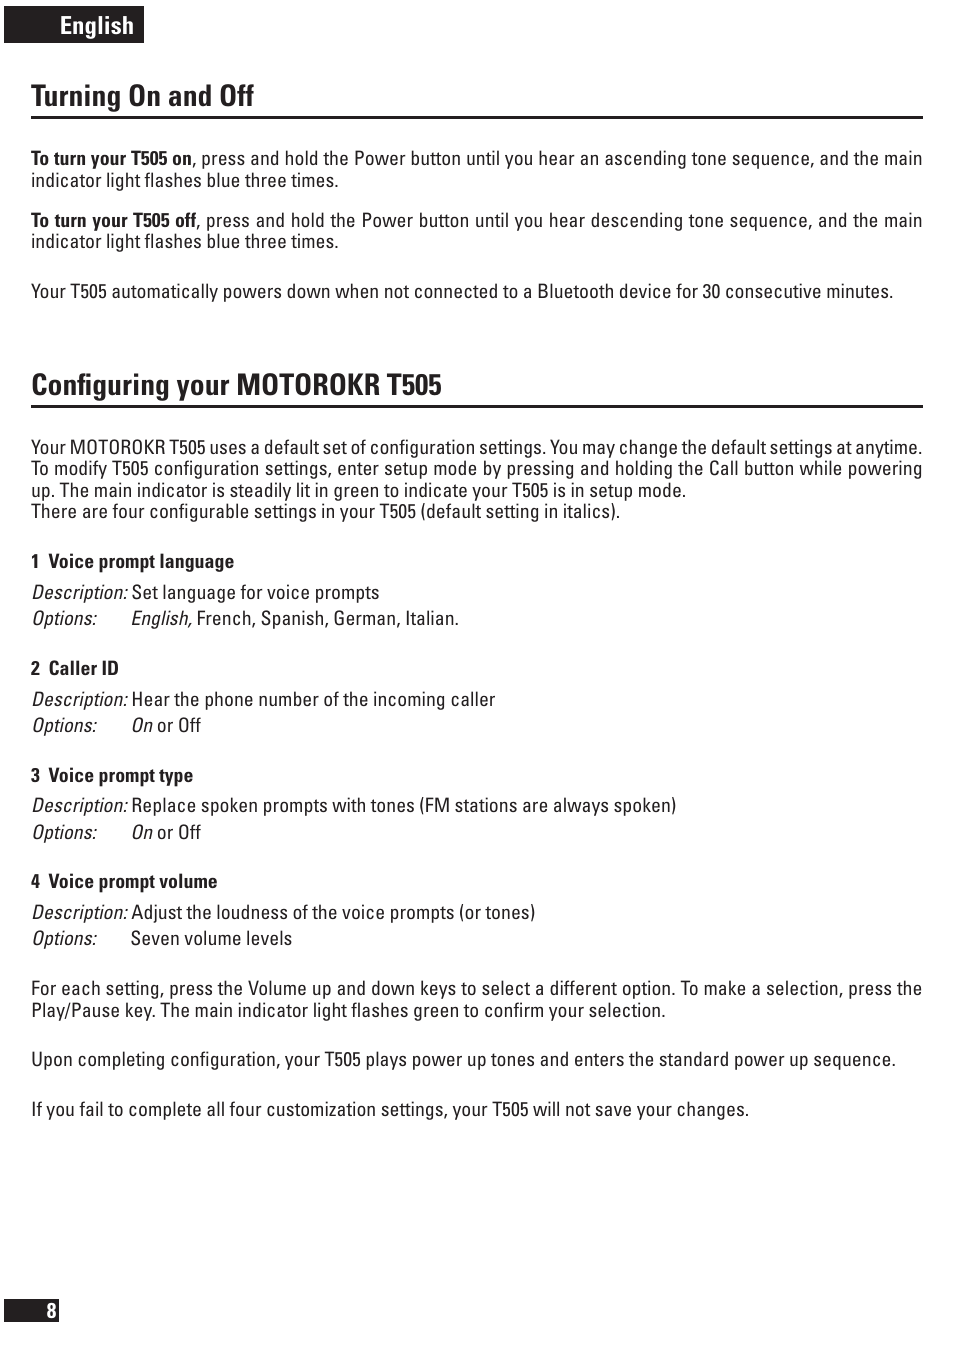 Turning on and off, Conﬁguring your motorokr t505, English | Motorola